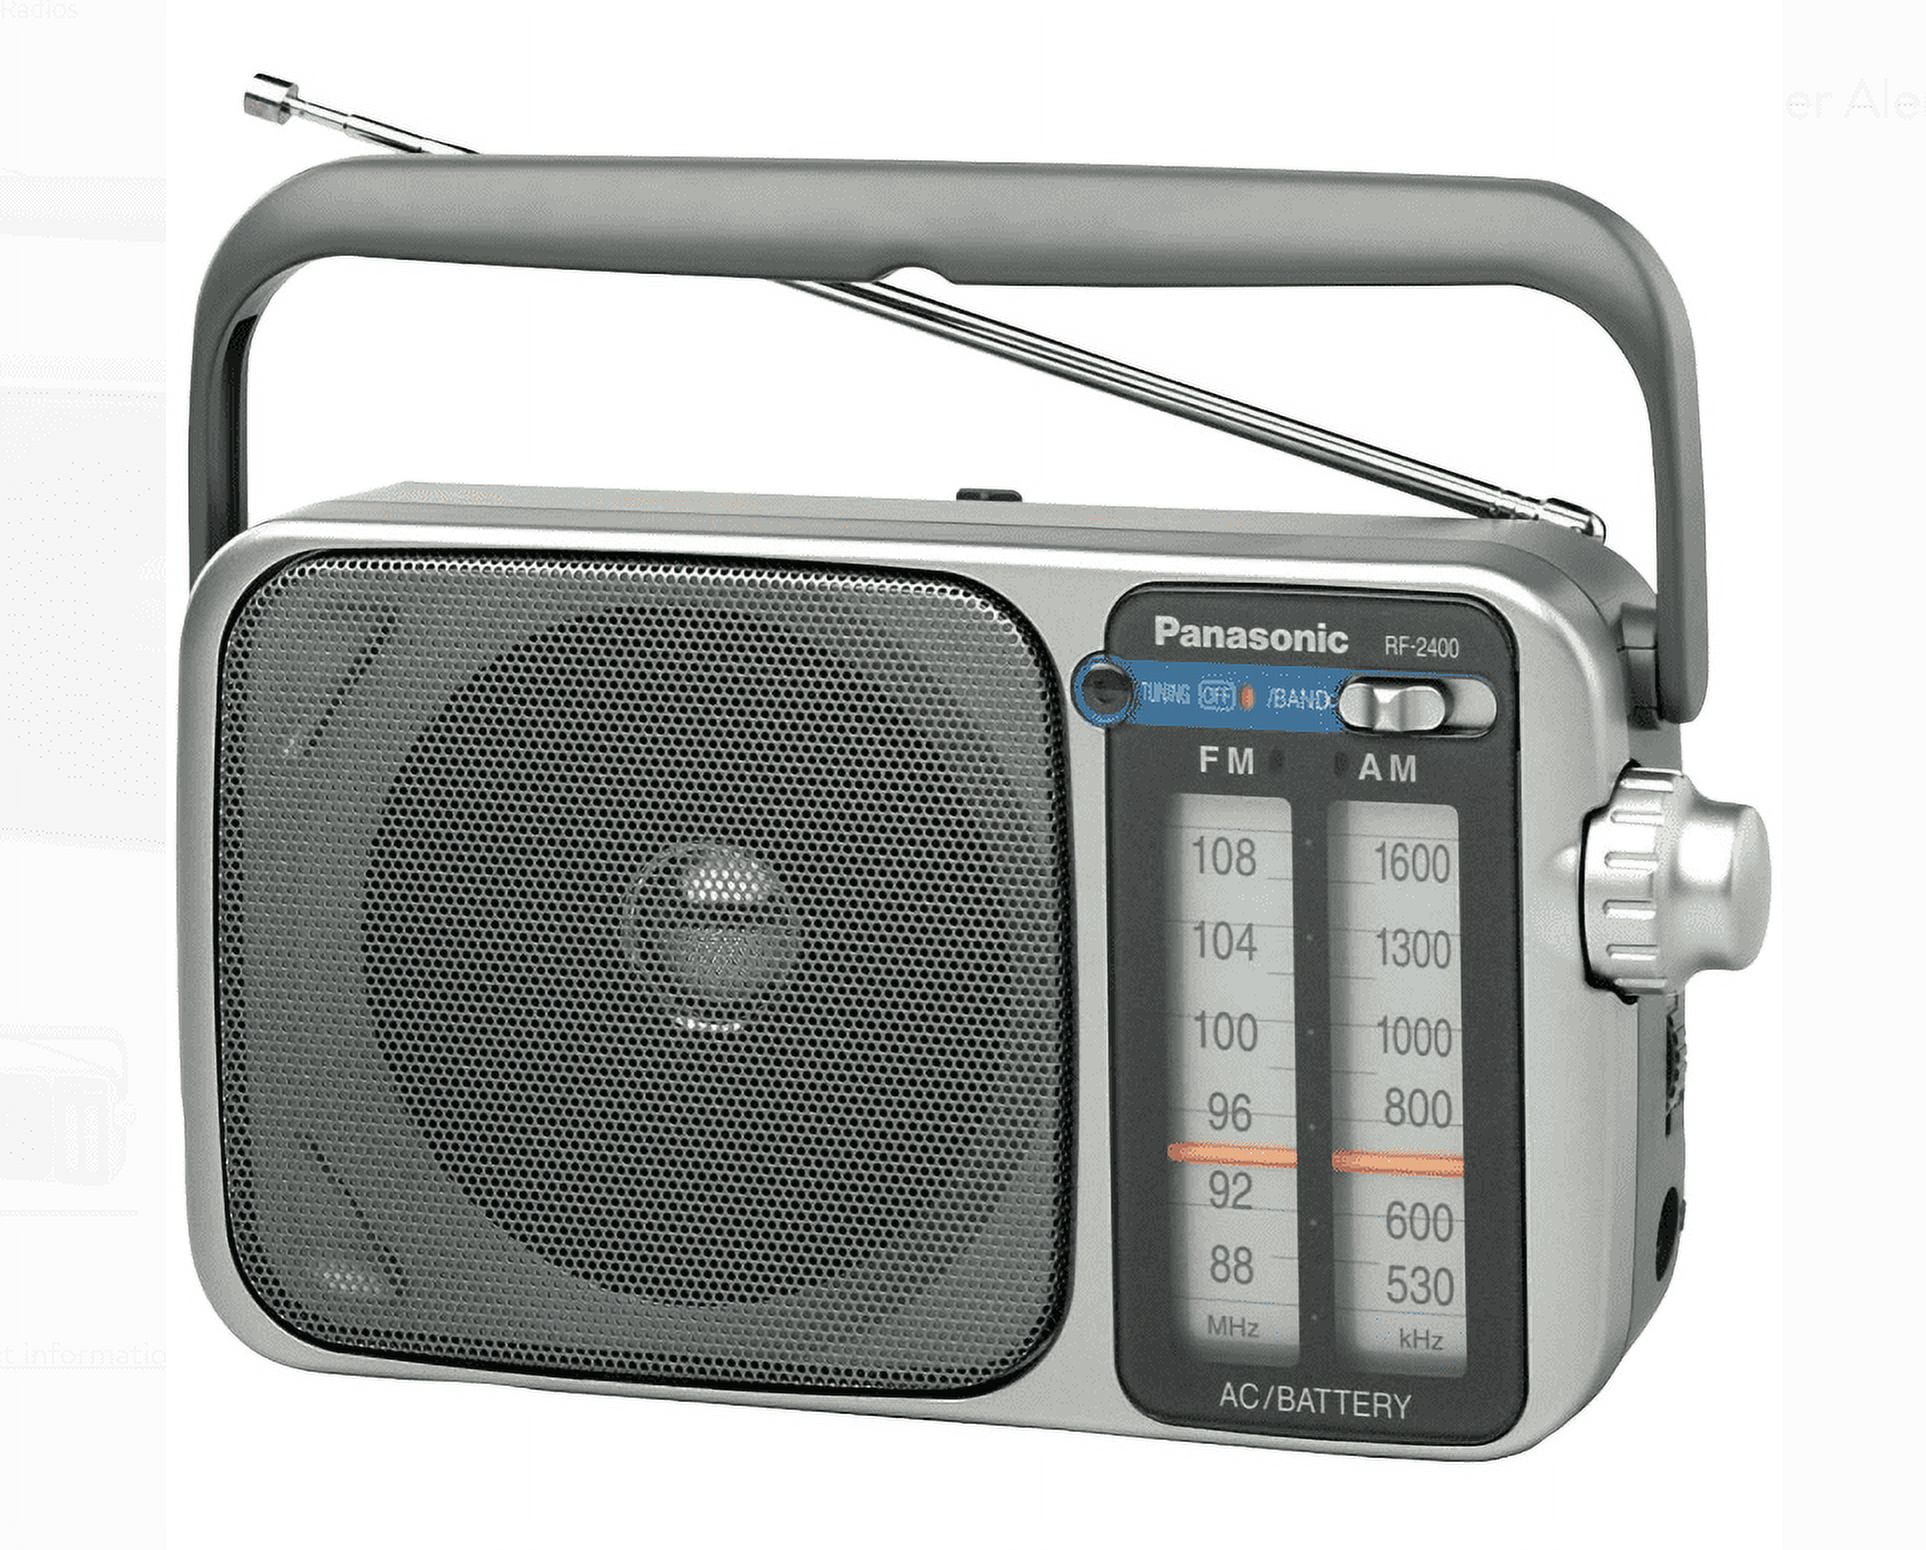 Panasonic Portable AM / FM Radio, Battery Operated Analog Radio, AC  Powered, Silver (RF-2400D) 